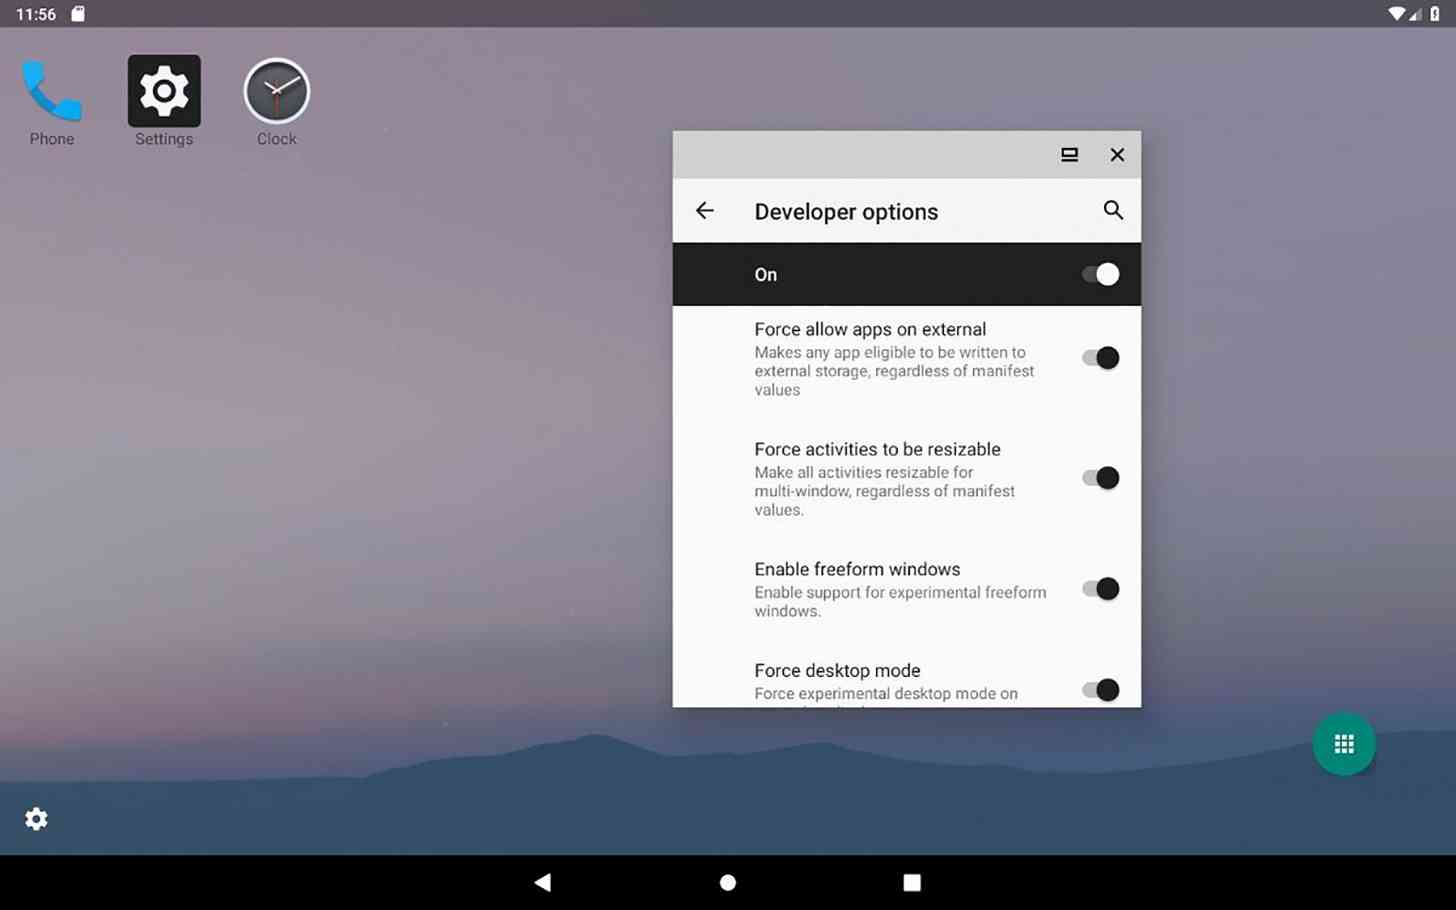 Android Q desktop mode